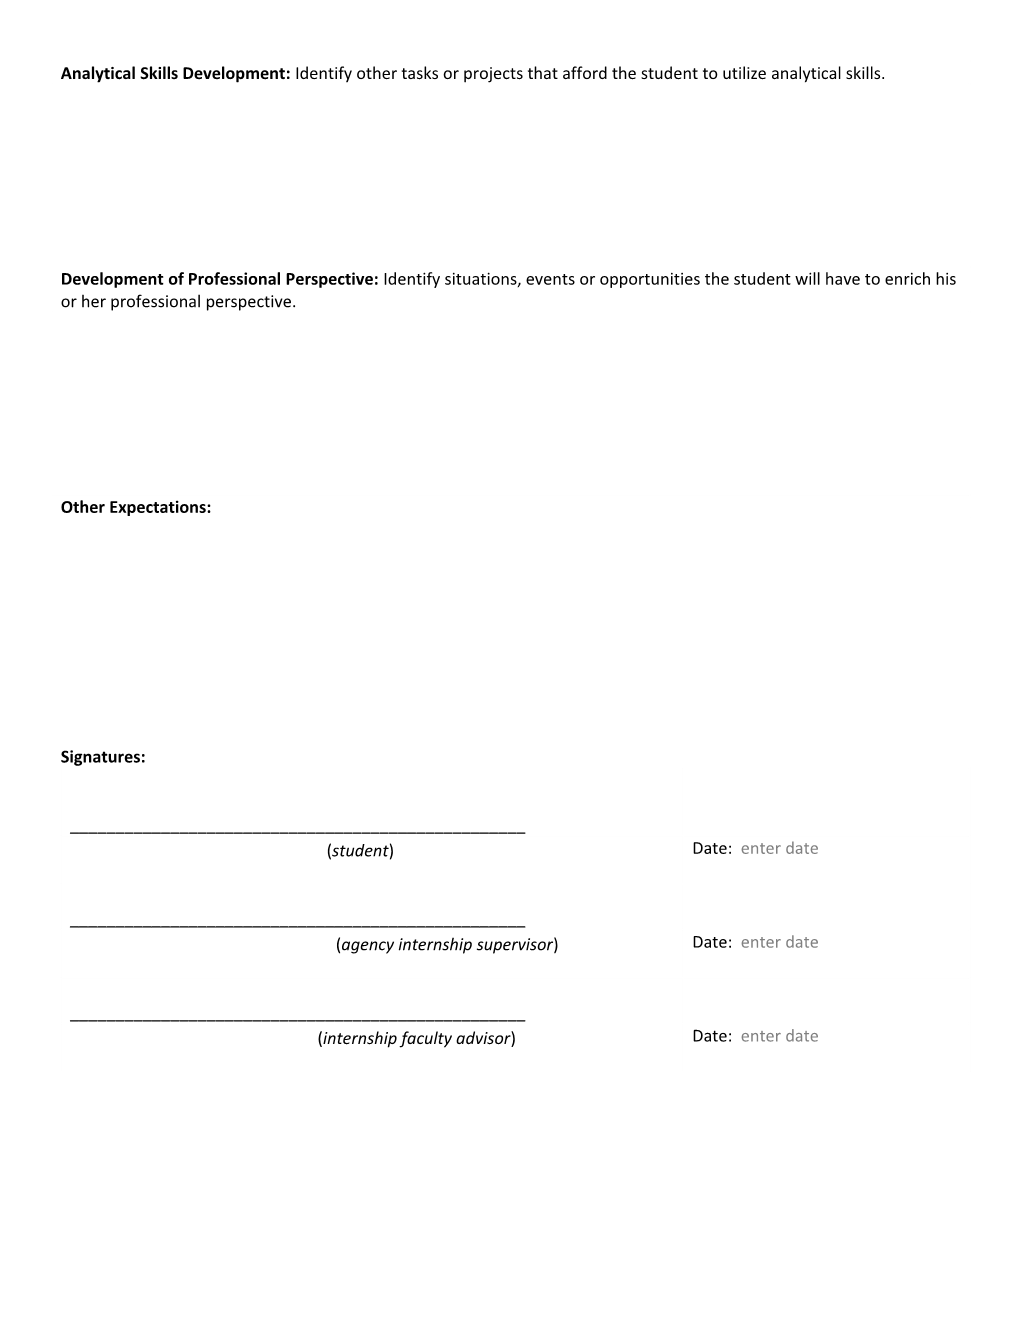 MPA Internship Learning Contract